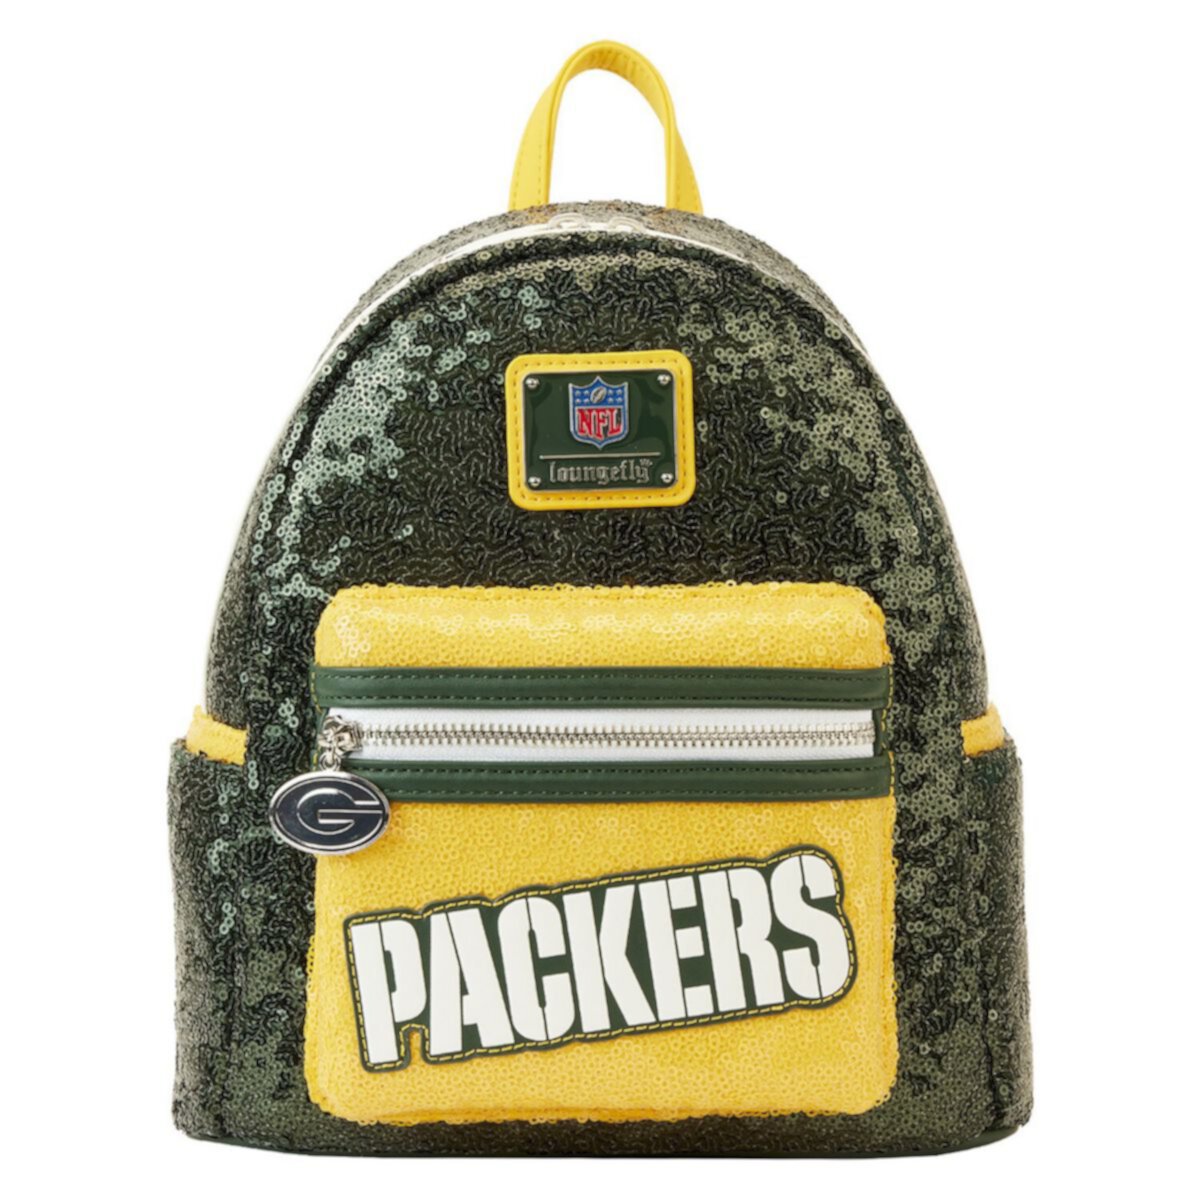 Мини-рюкзак с пайетками Loungefly Green Bay Packers Unbranded